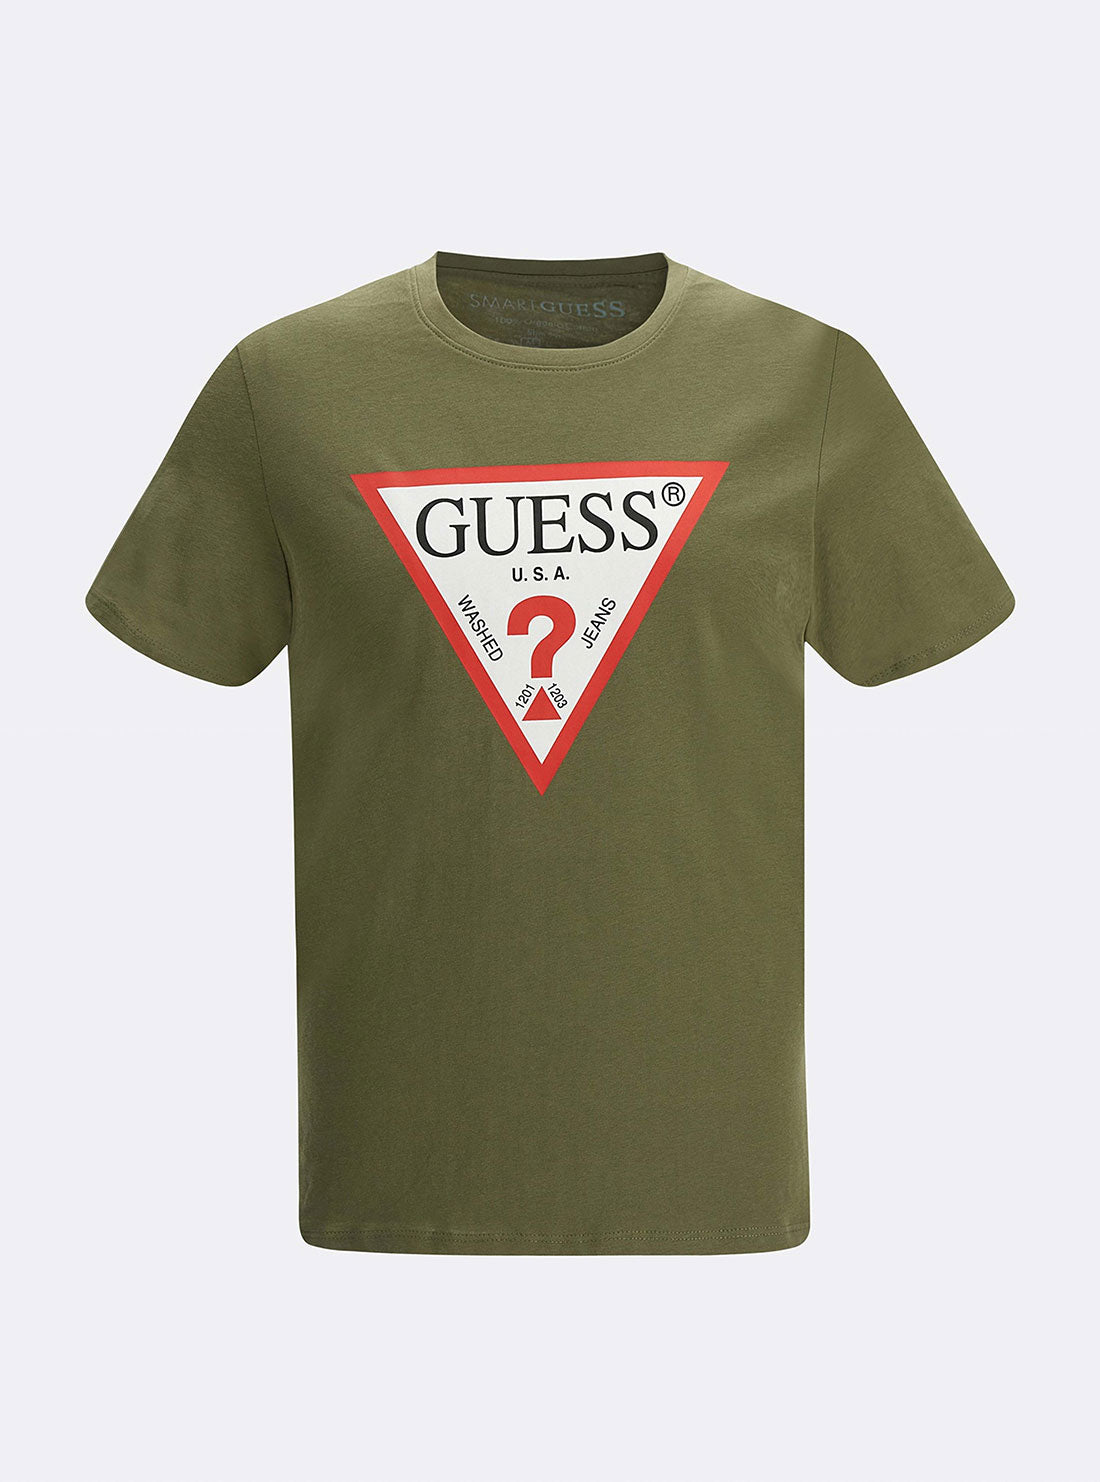 GUESS Mens Eco Desert Green Original Logo T-Shirt M1RI71I3Z11 Ghost Front View